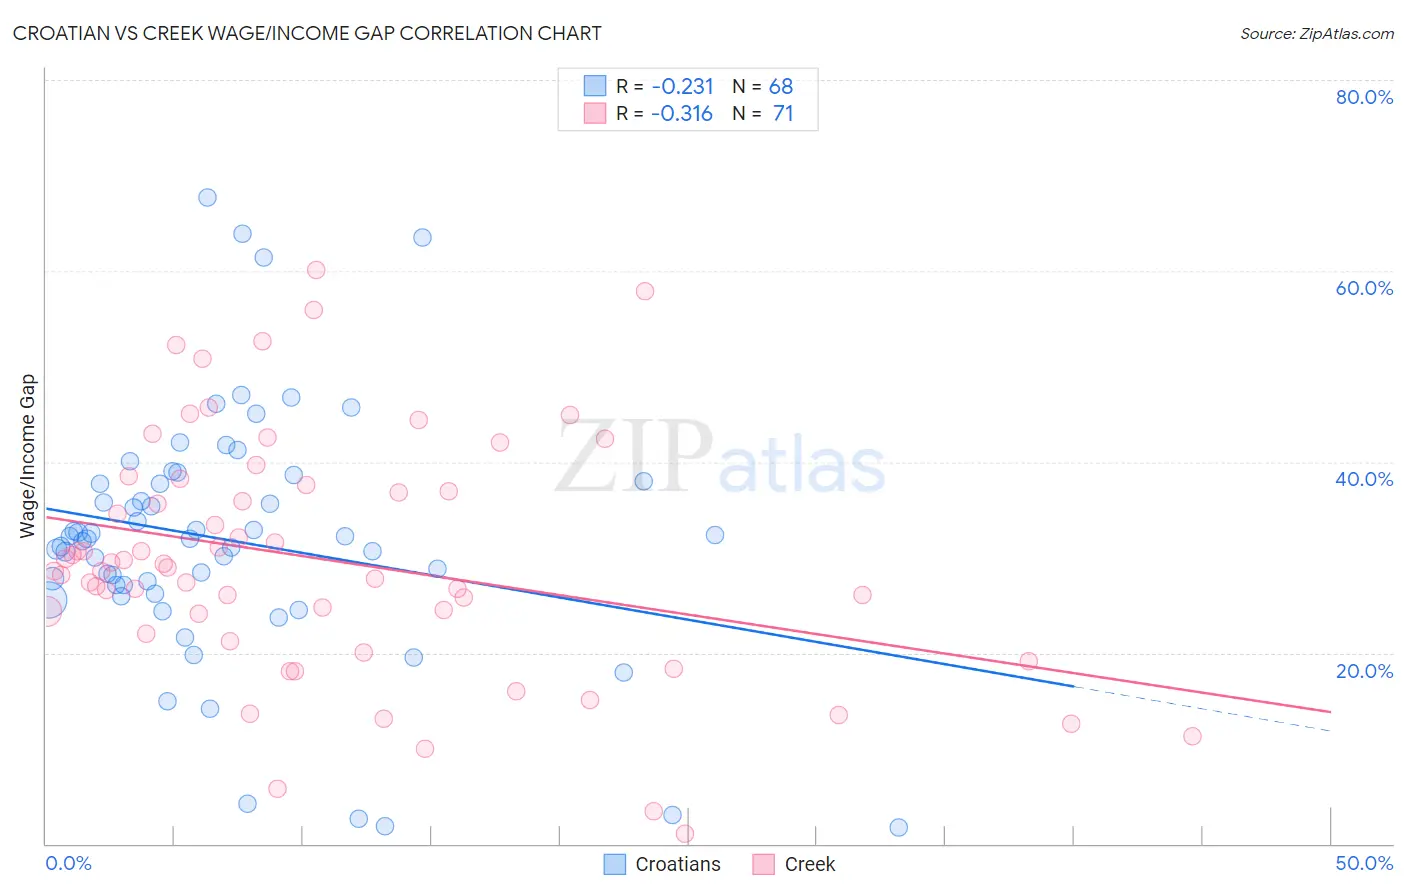 Croatian vs Creek Wage/Income Gap